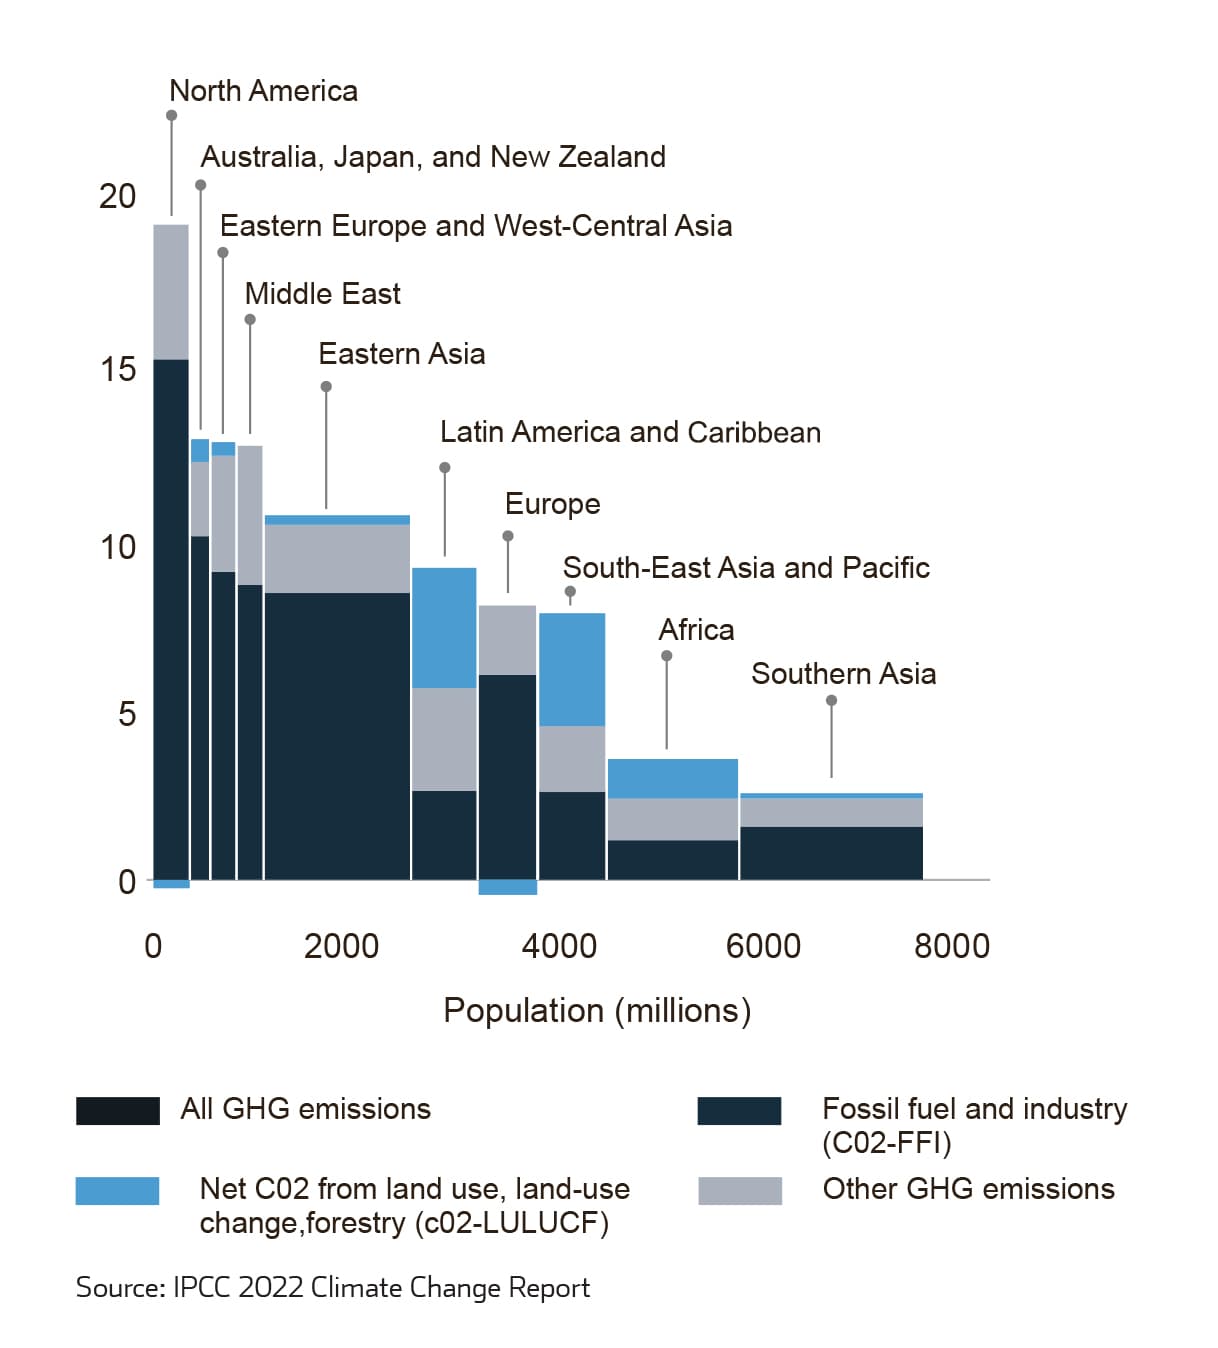 Net Anthropogenic GHG Emissions per Capita and for Total Population, per Region in 2019